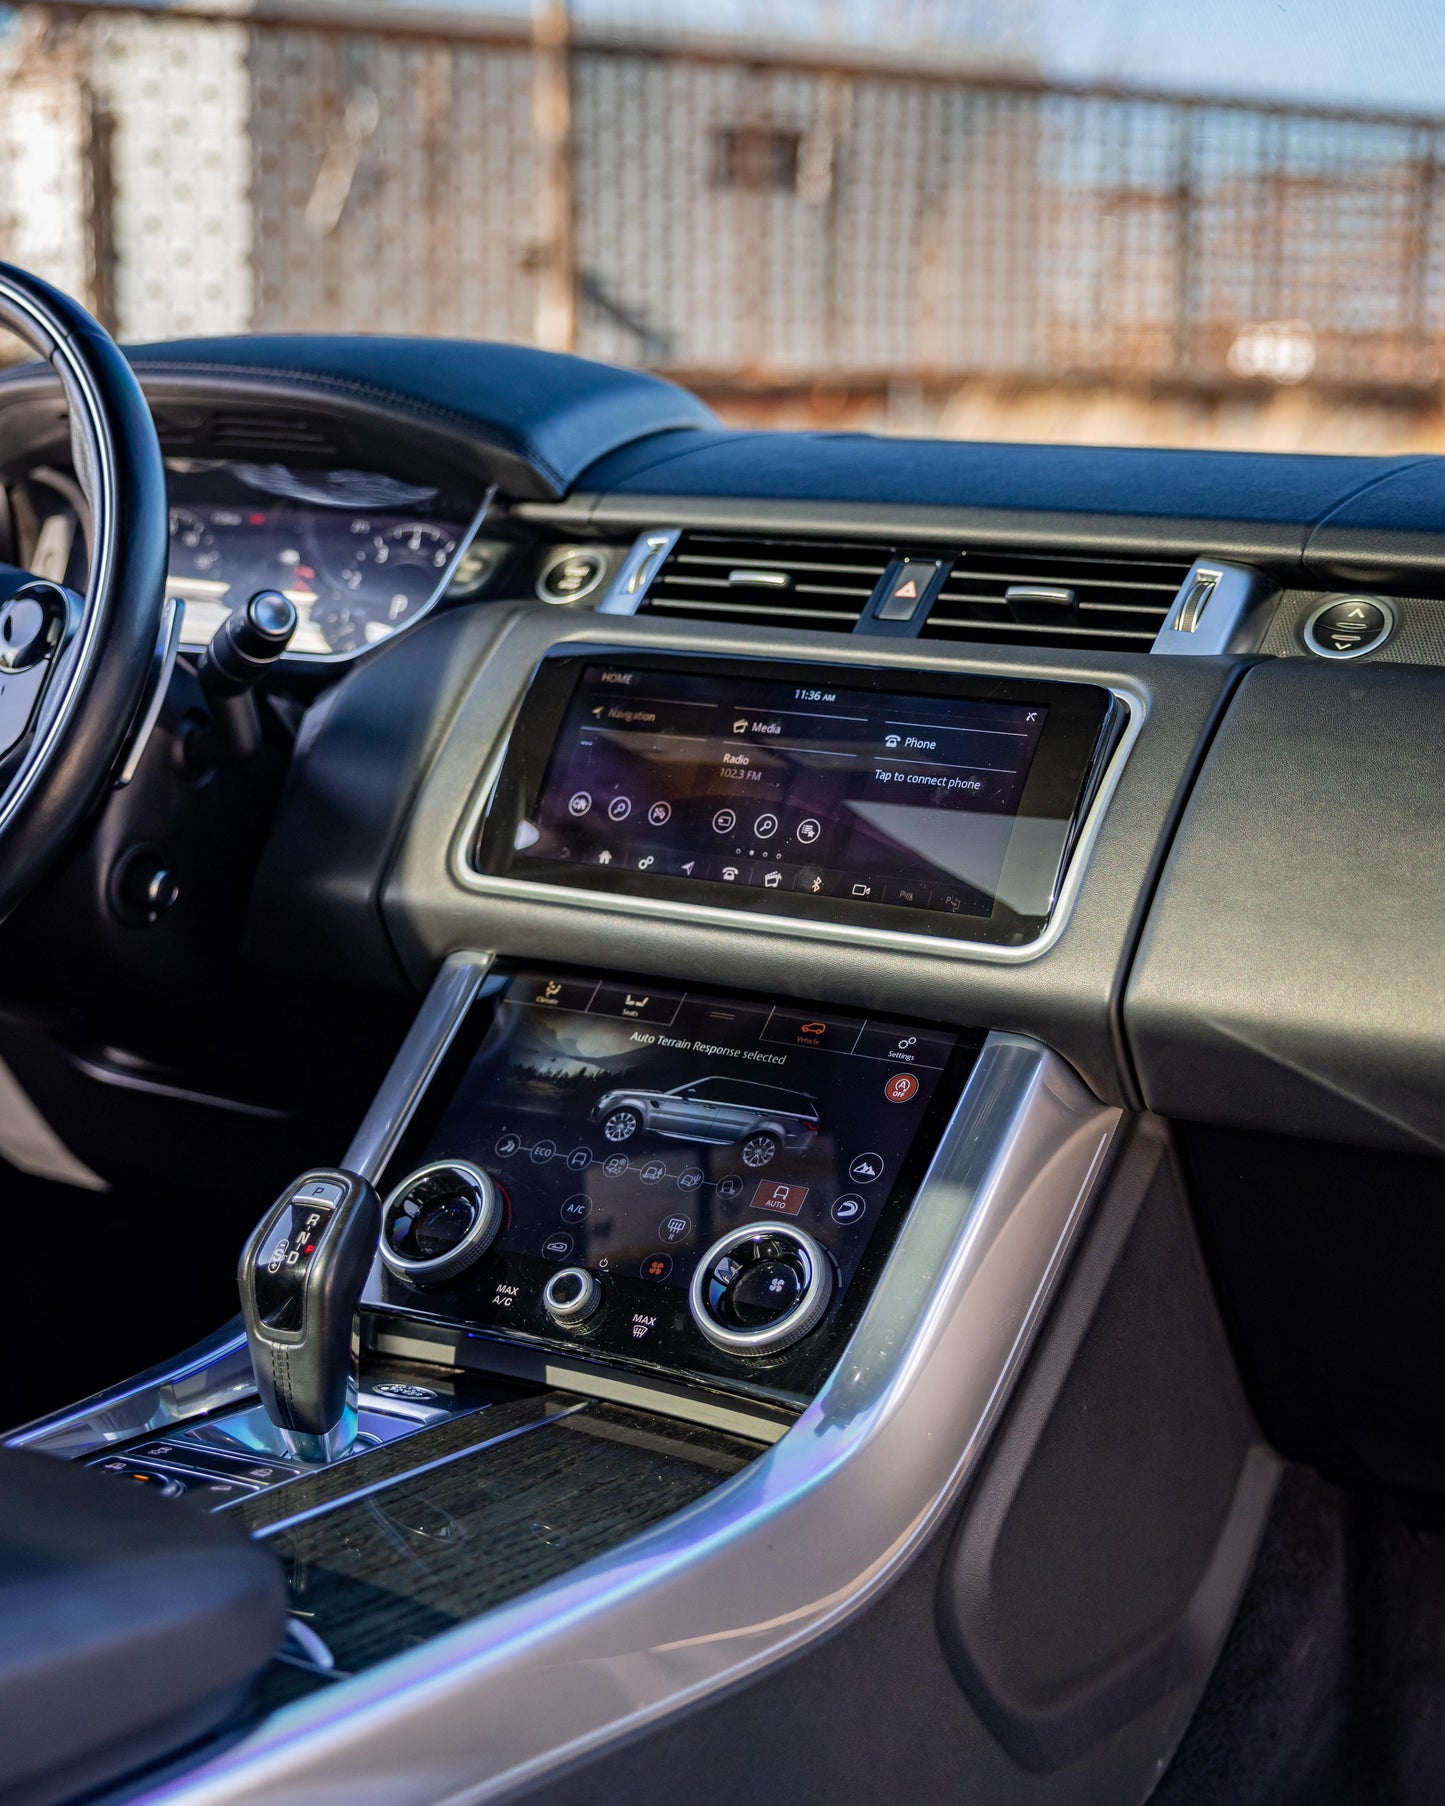 2019 Range Rover Spot V8 Supercharged